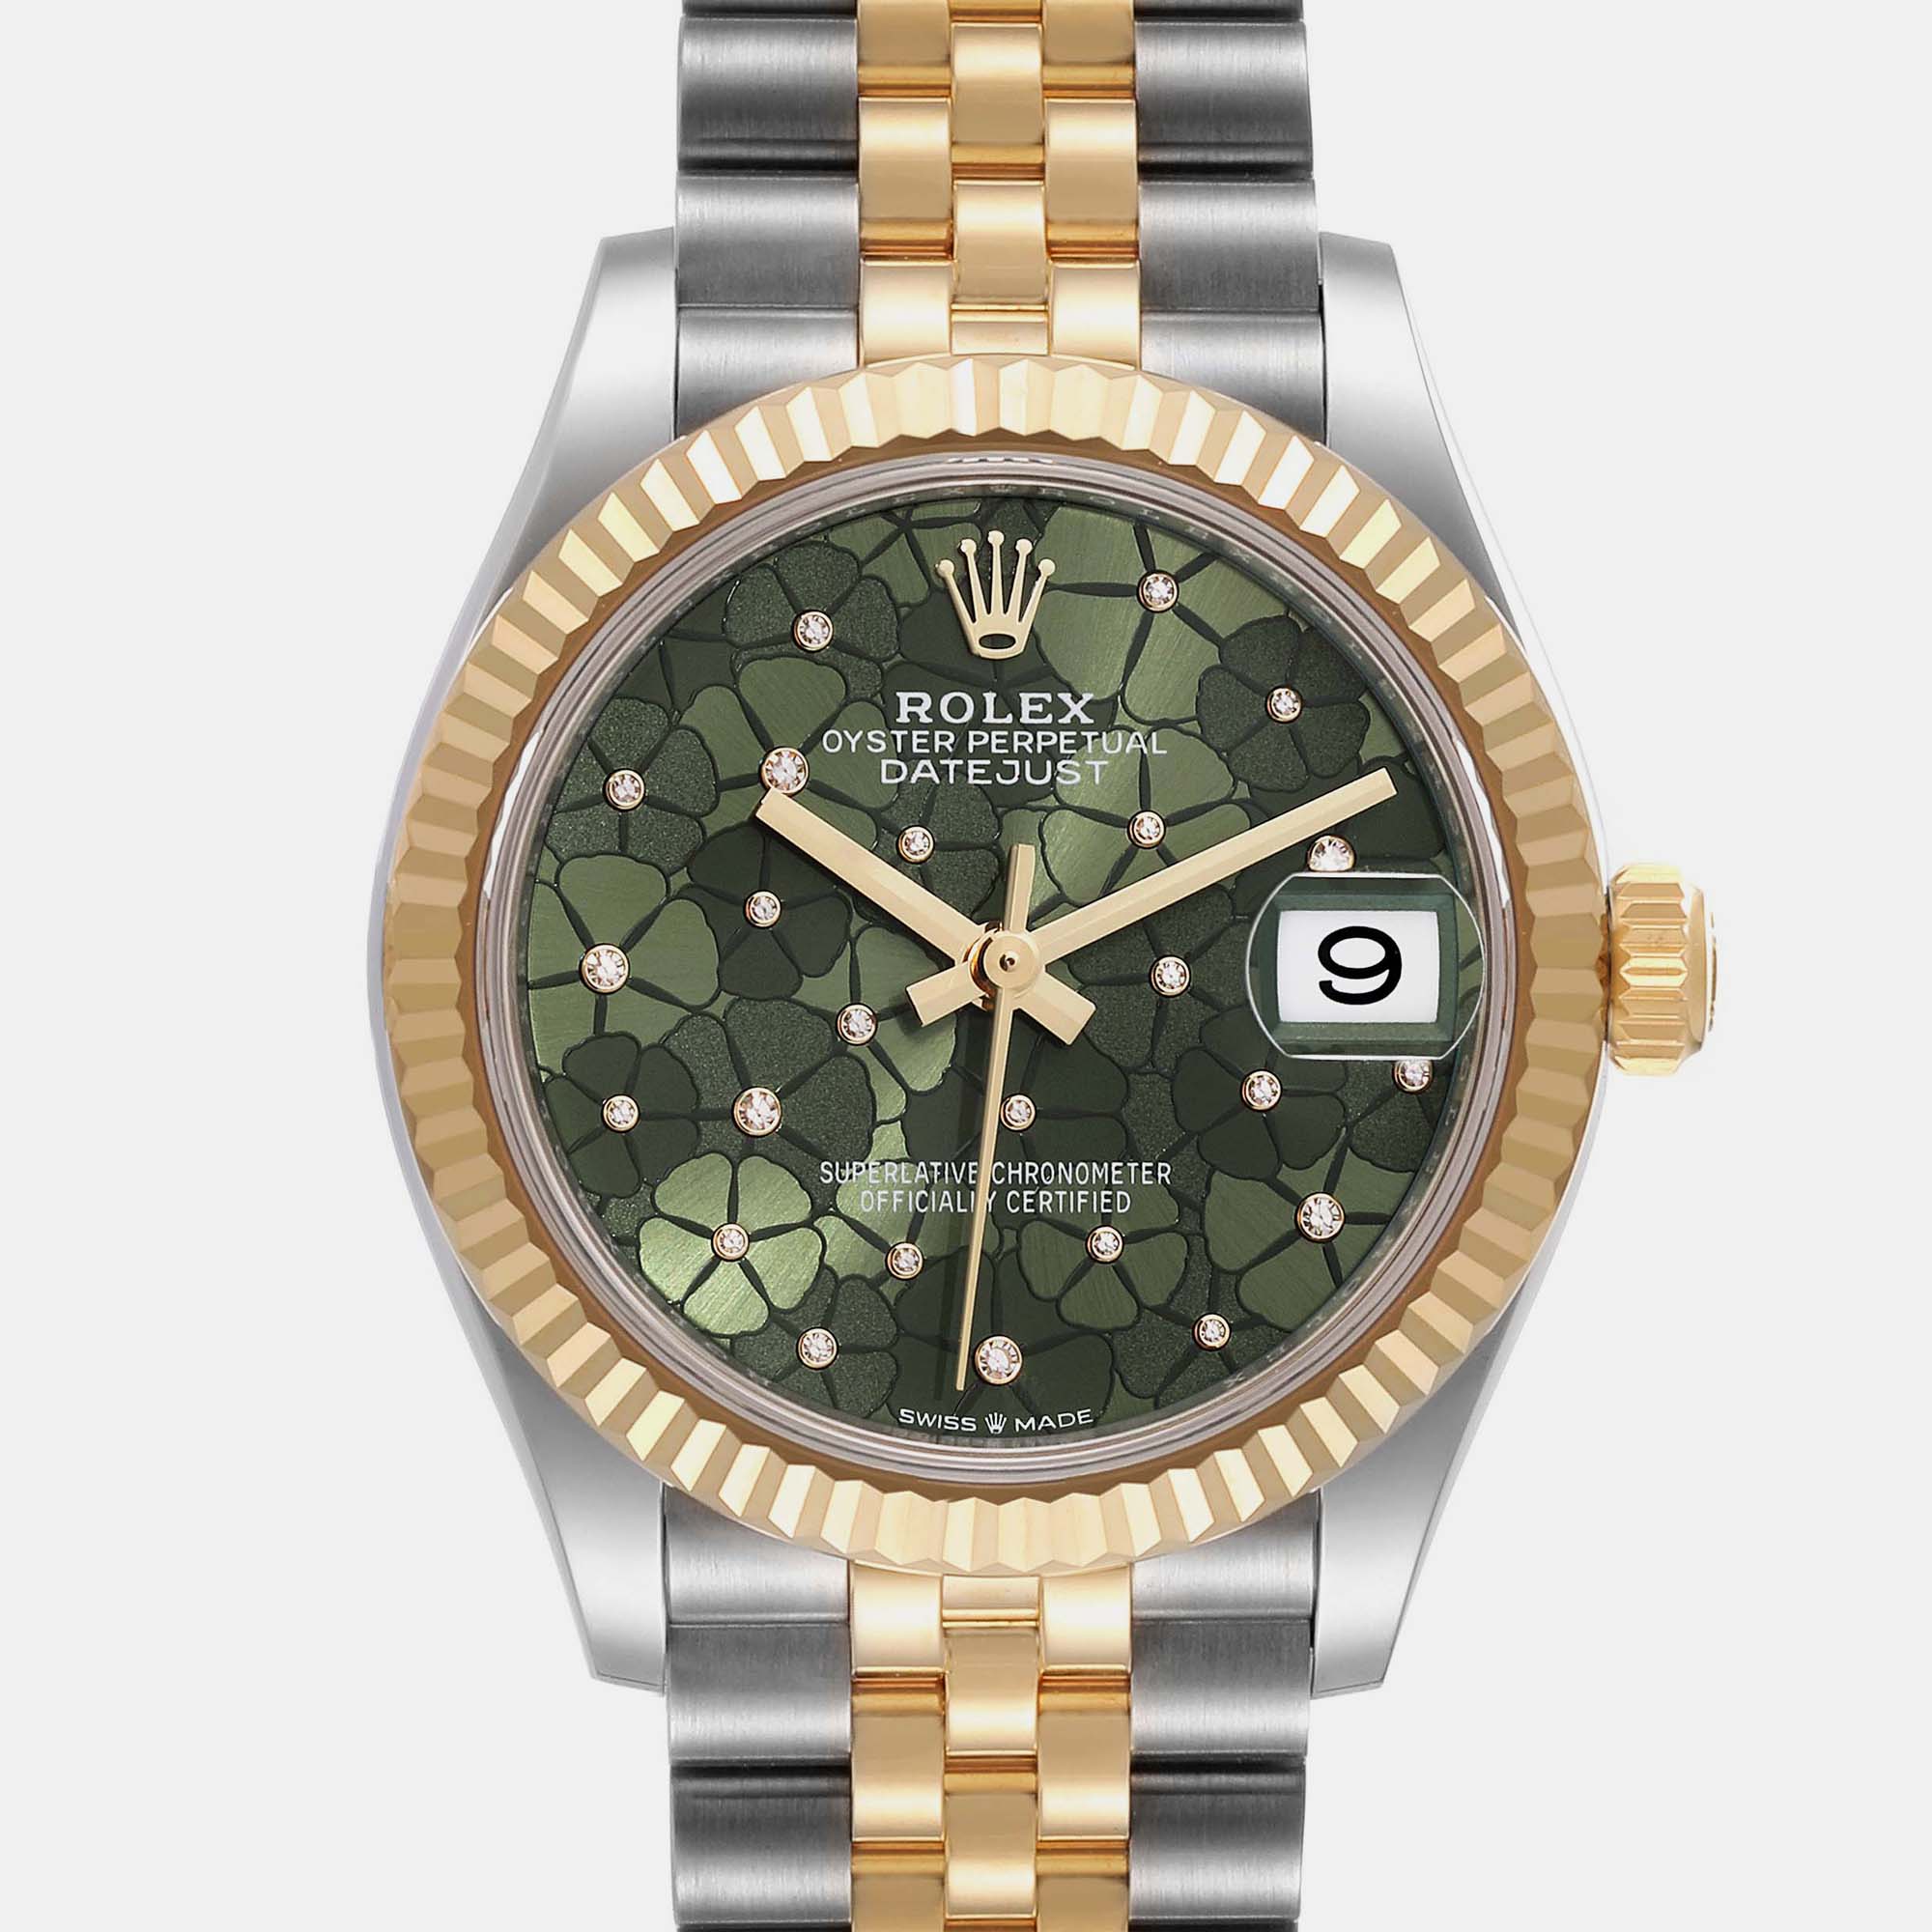 Rolex Datejust Midsize Steel Yellow Gold Diamond Dial Ladies Watch 278273 Unworn